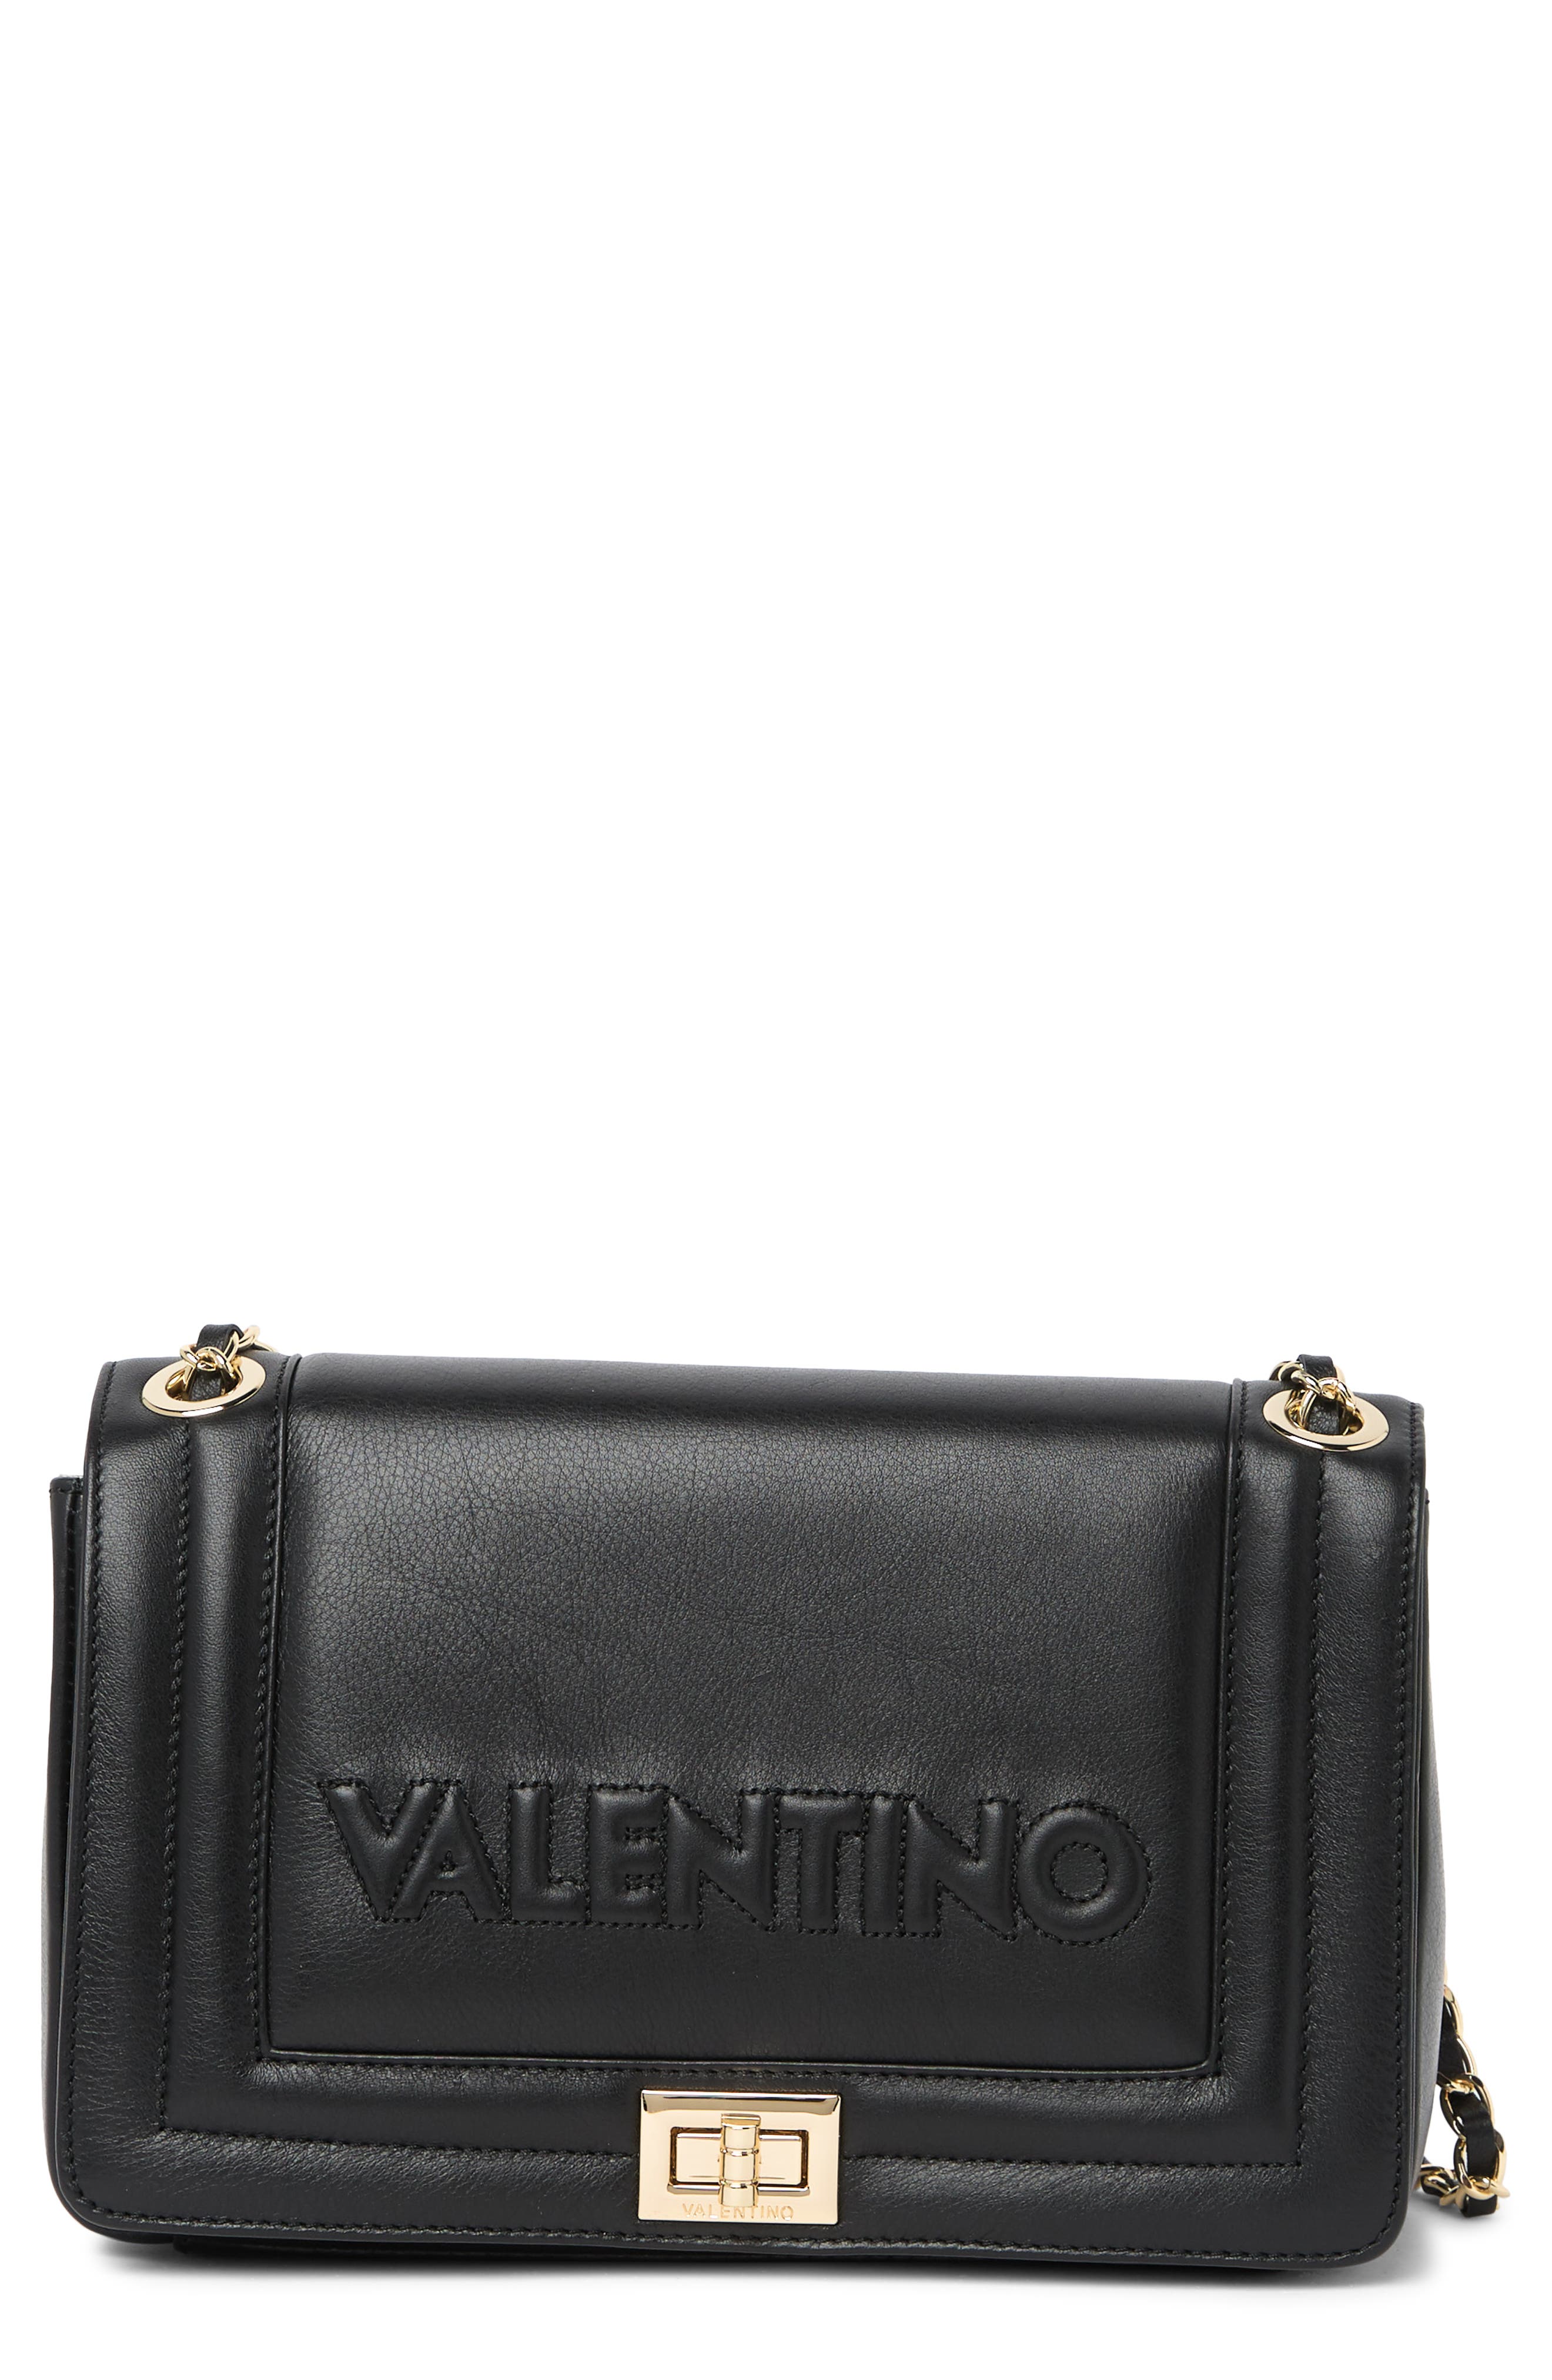 VALENTINO BY MARIO VALENTINO ALICE SAUVAGE LEATHER SHOULDER BAG,840099746607